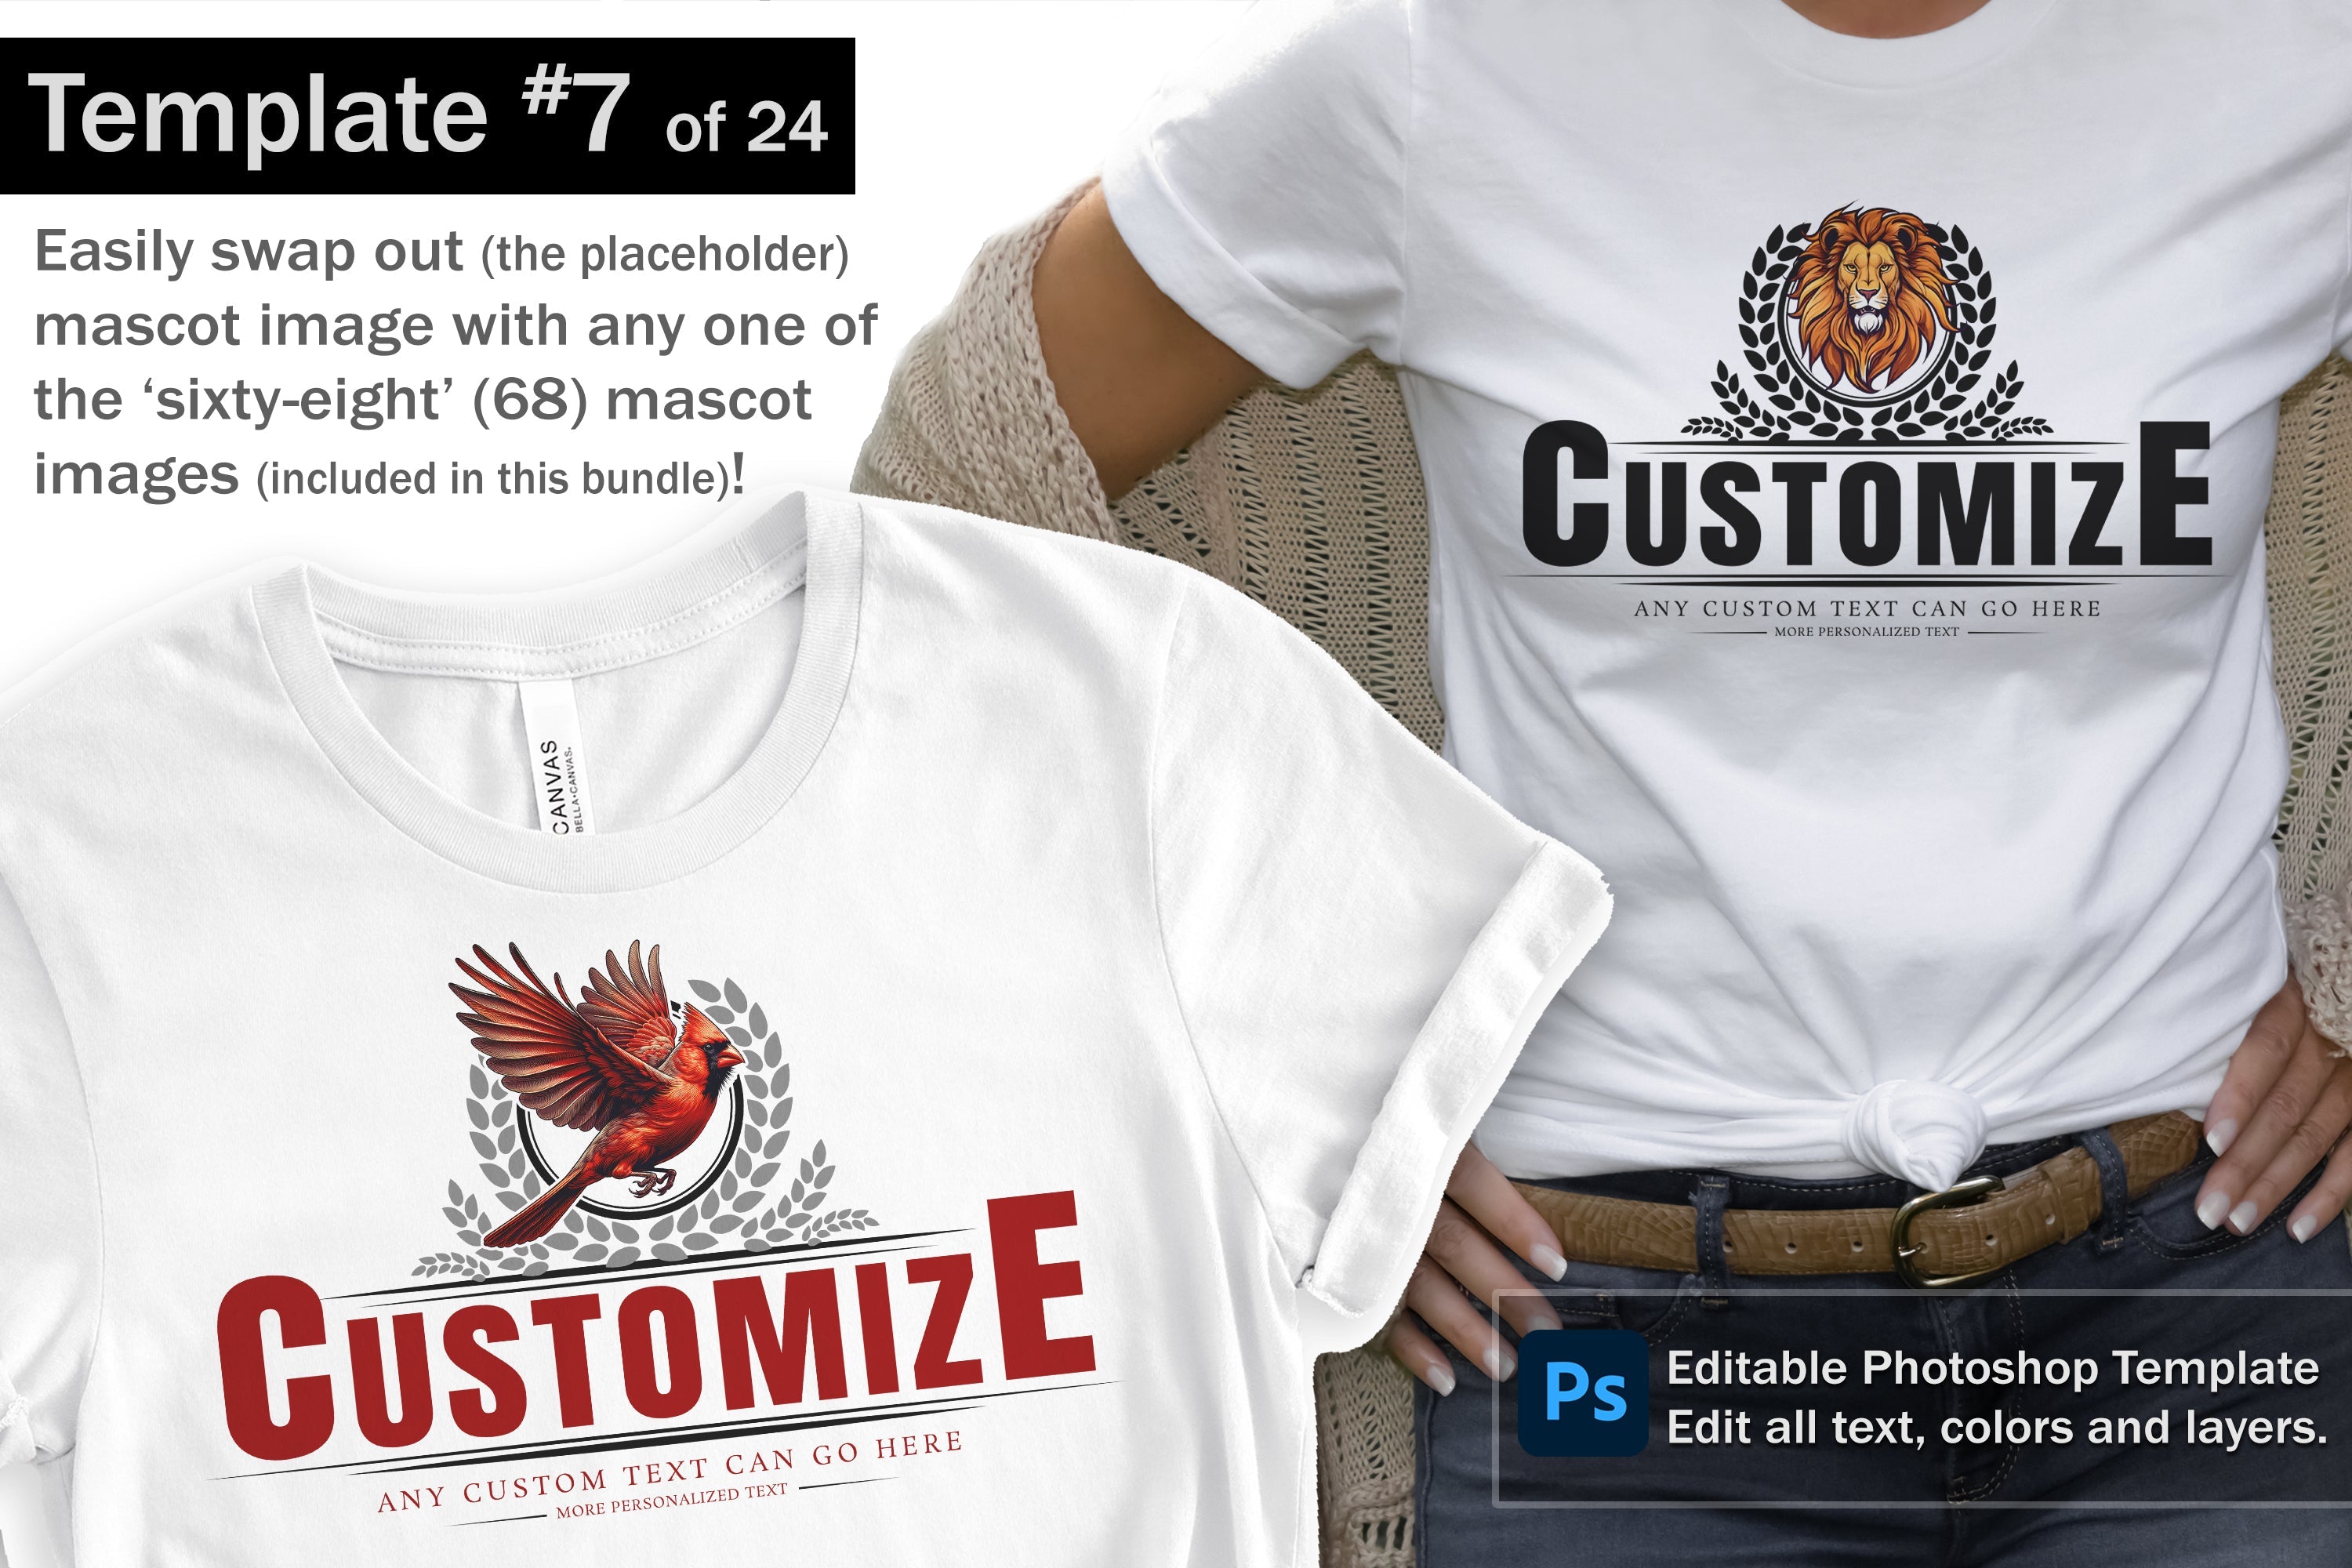 Gator Logo and DIY T-shirt Design Bundle